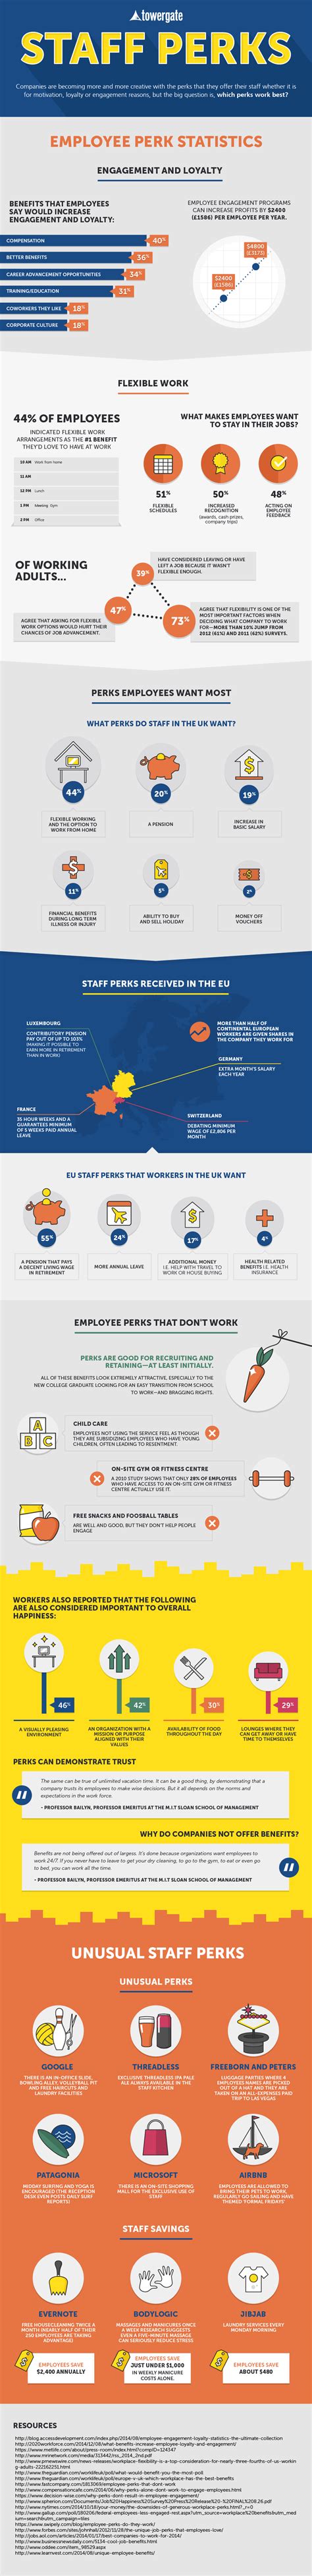 What Staff Perks Work Best Employee Perks Staff Perks Work Infographic